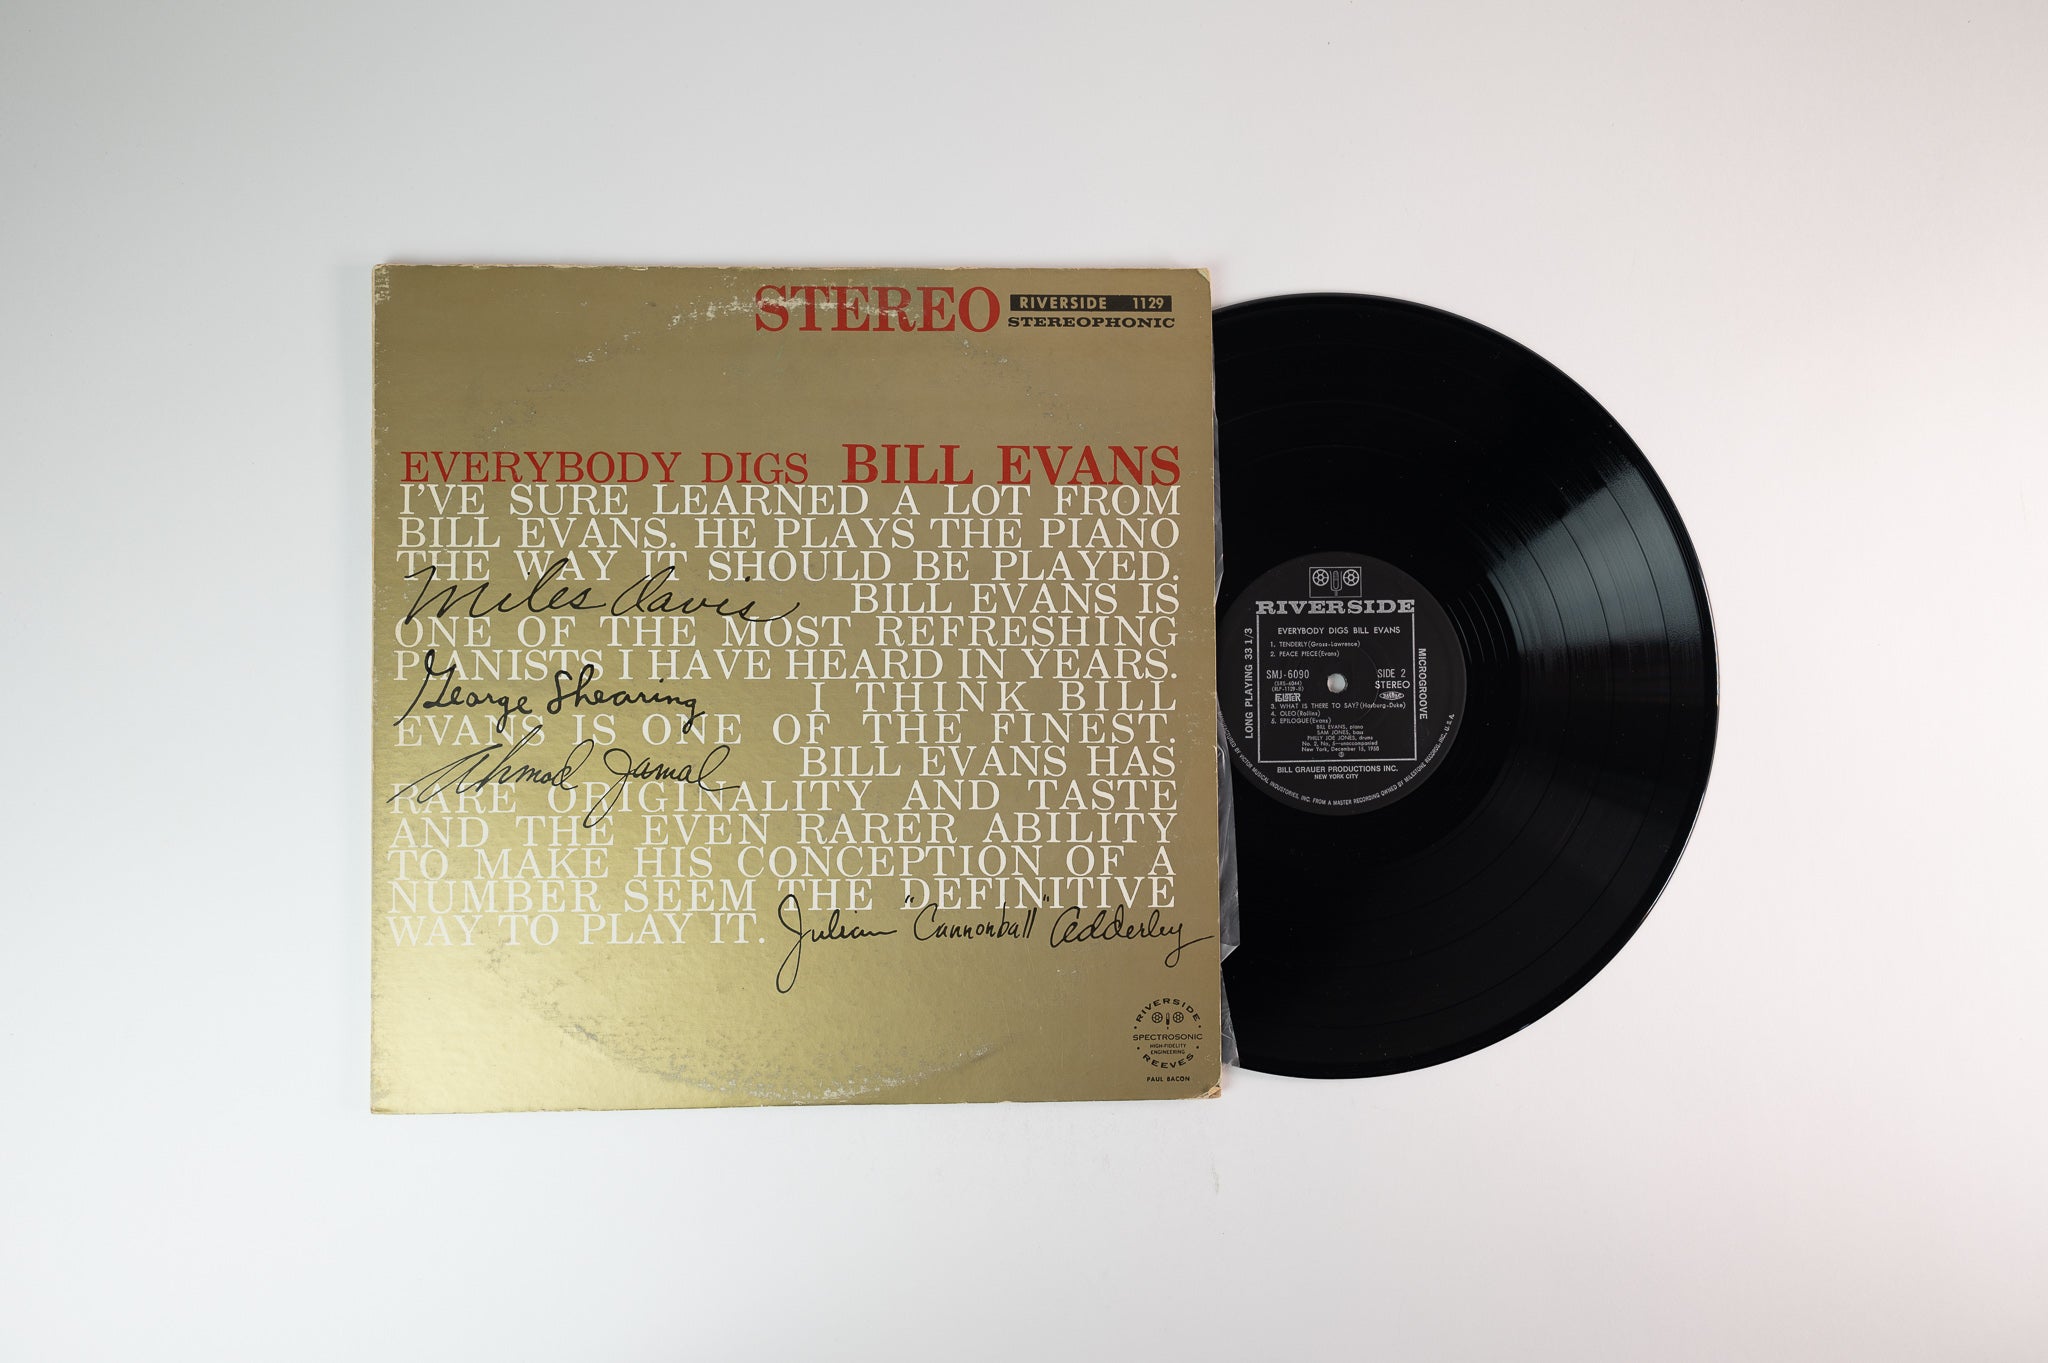 The Bill Evans Trio - Everybody Digs Bill Evans on Riverside - 1975 Japanese Reissue